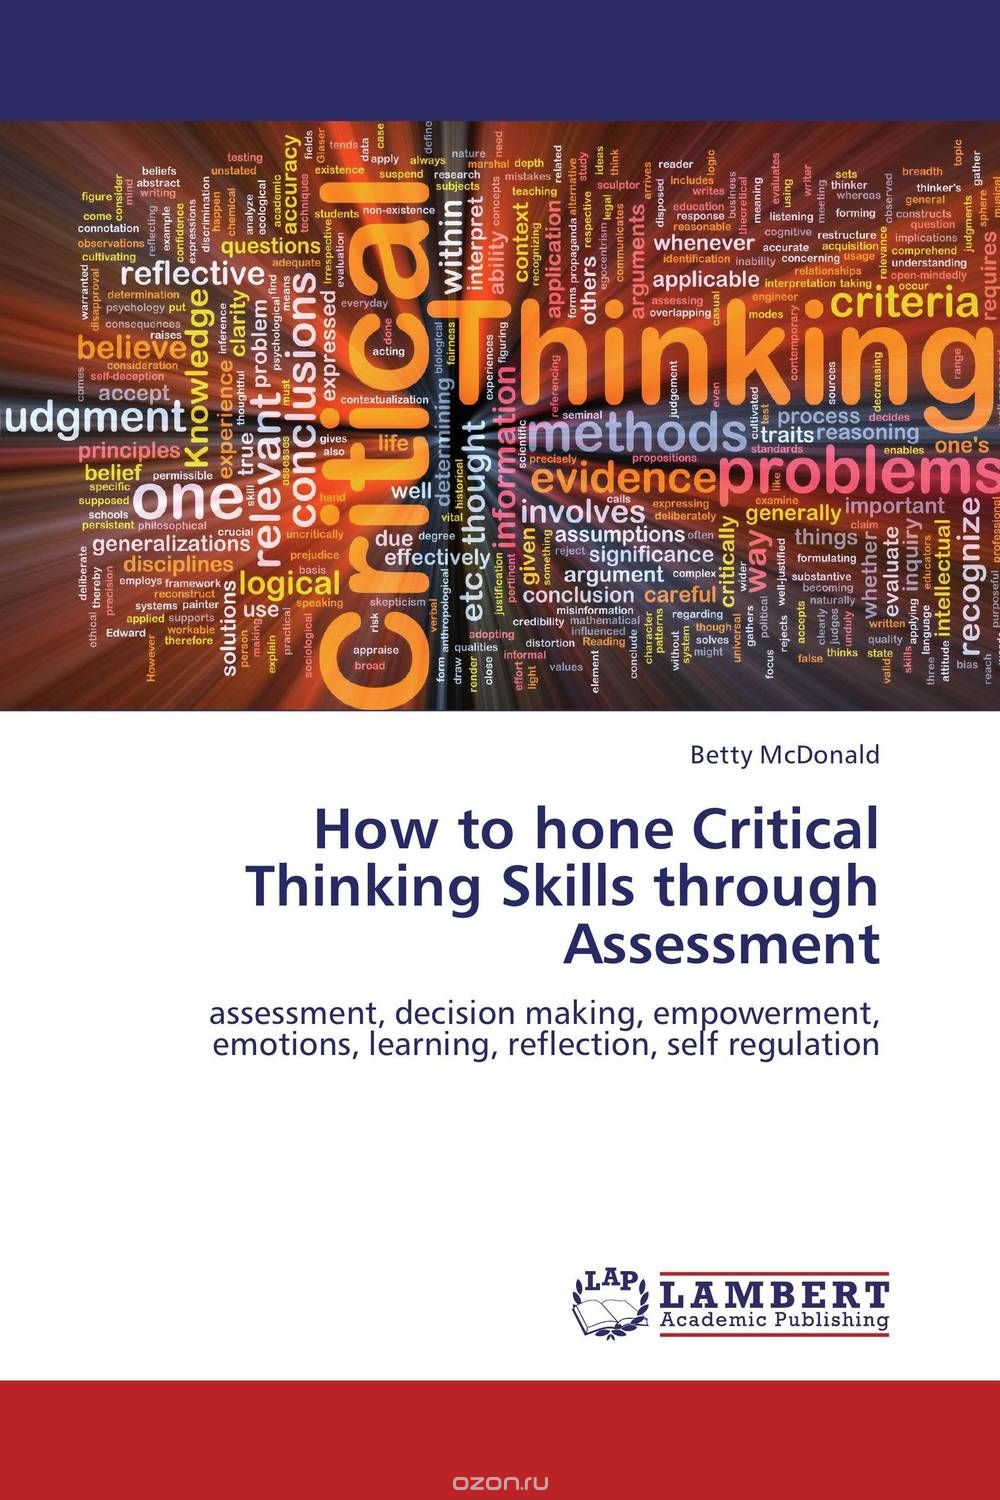 Скачать книгу "How to hone Critical Thinking Skills through Assessment"